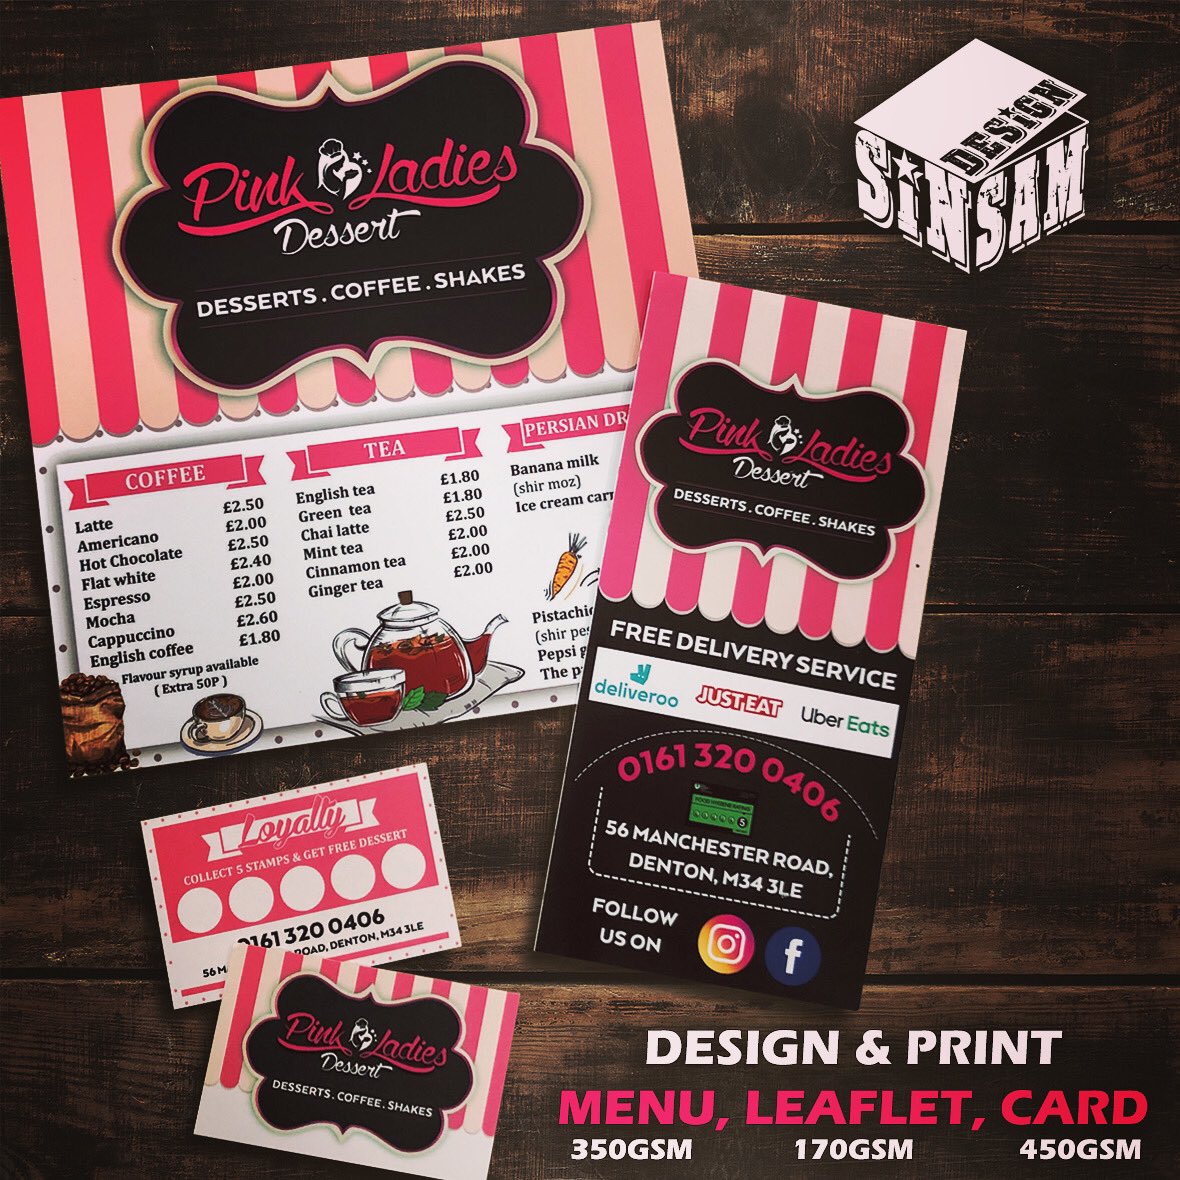 Design & Print BY SinSam Design ... #logos #logodesign #design #designs #graphicdesign #photoshop #graphicdesigns #prints #colour #sinsamdesign #leaflet #menu #flyer #flyerdesign #leafletdesign #leafletprinting  #coffeeshop #sweet #dessert #milkshake #cafe #loyaltycards #pink